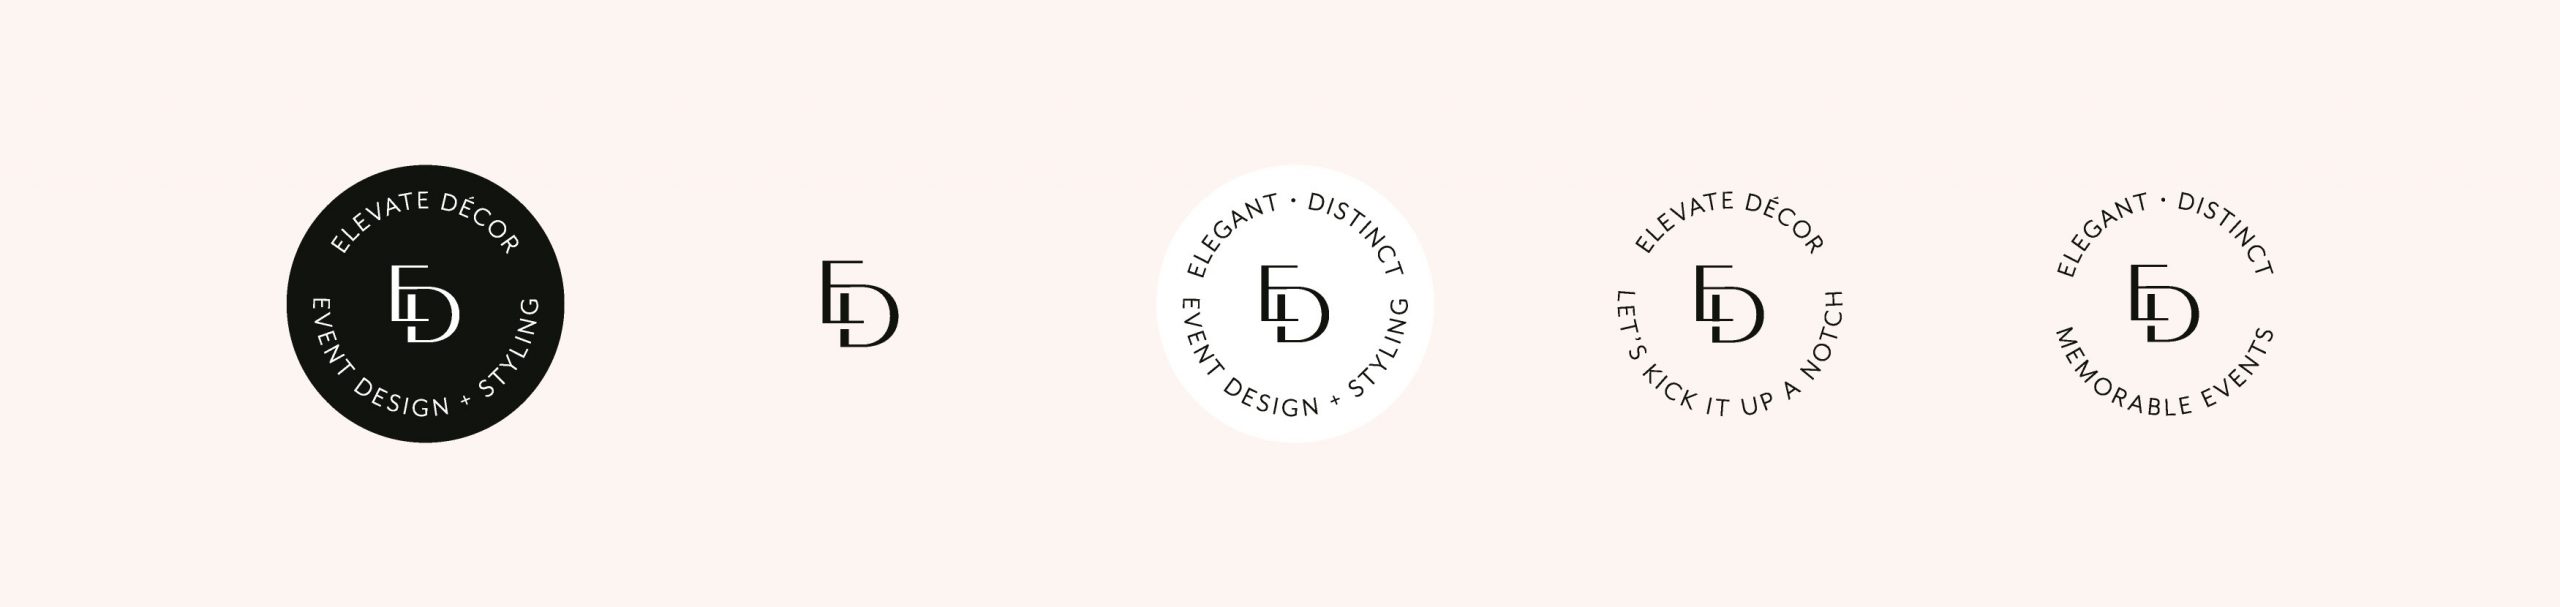 Custom Logo Design for event stylist Elevate Décor